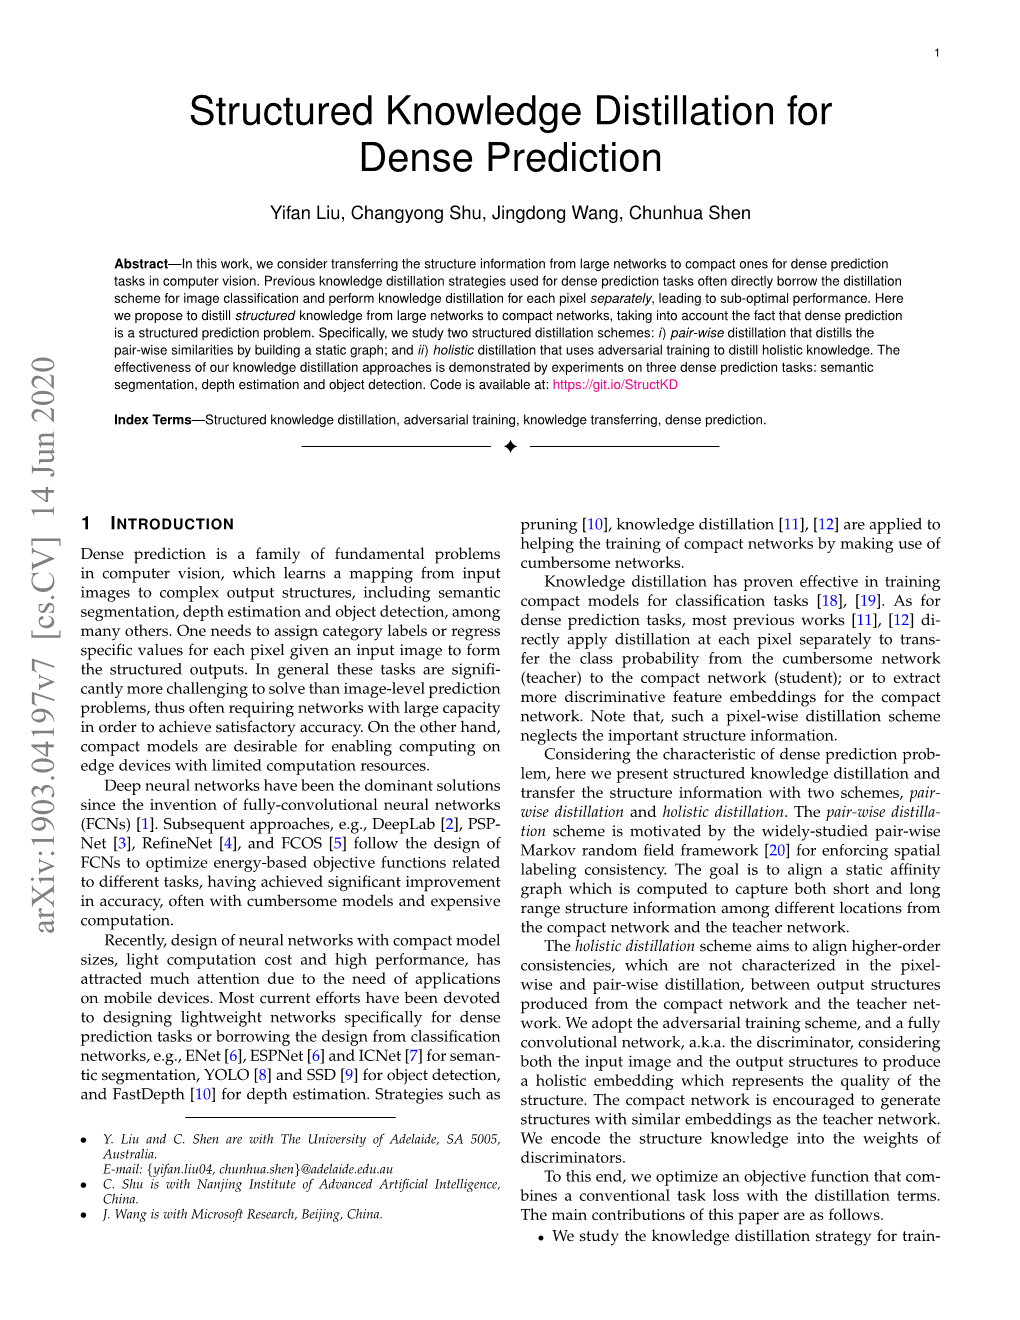 Structured Knowledge Distillation for Dense Prediction